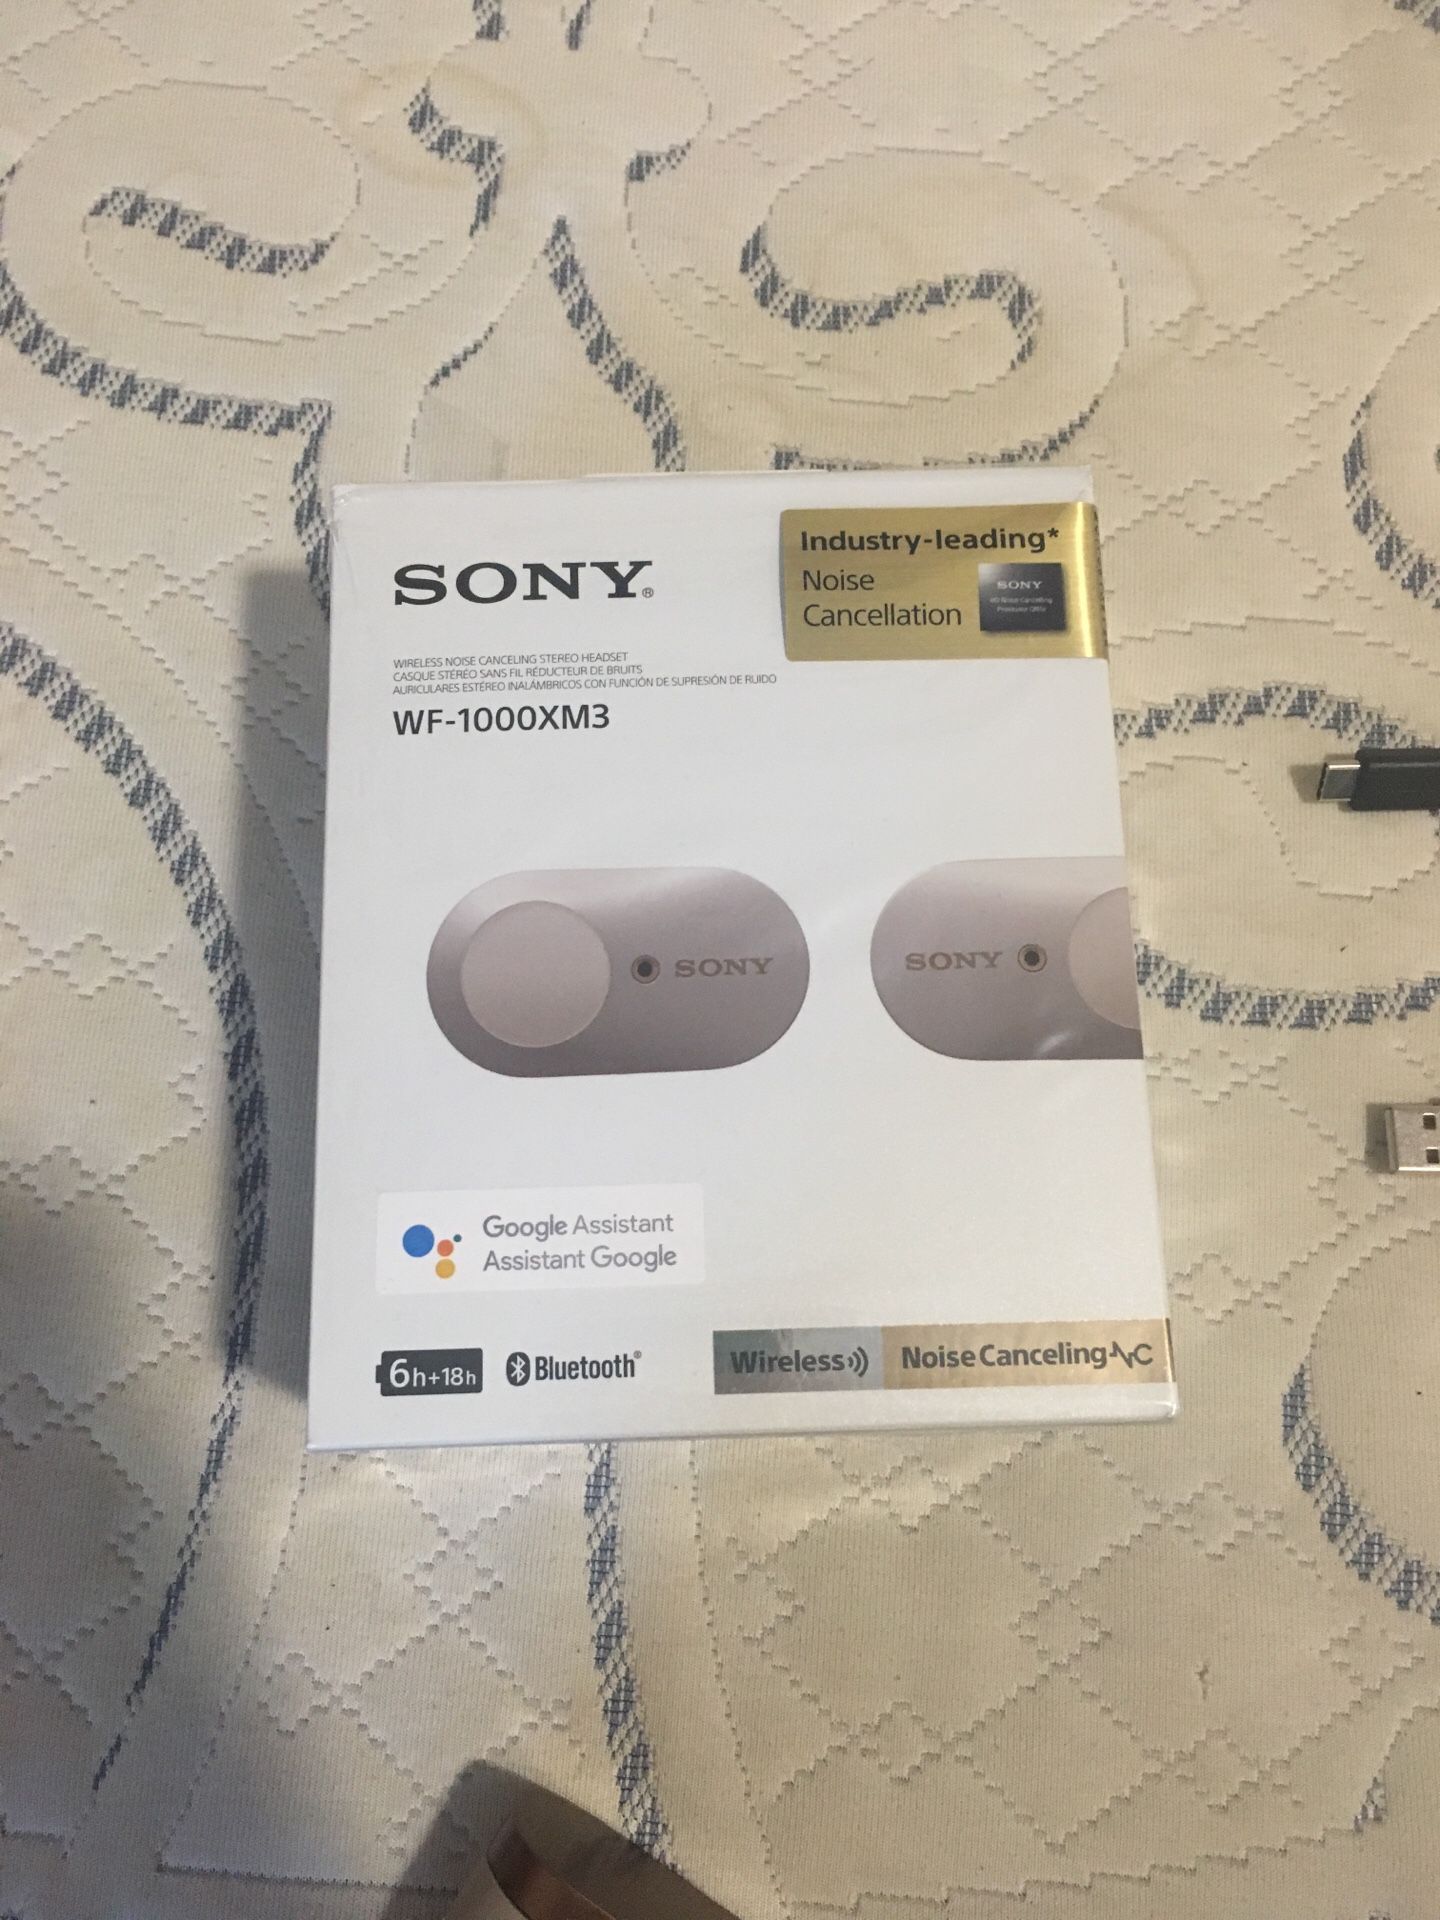 Sony WF-1000XM3 Noise Cancelling Wireless Headphones